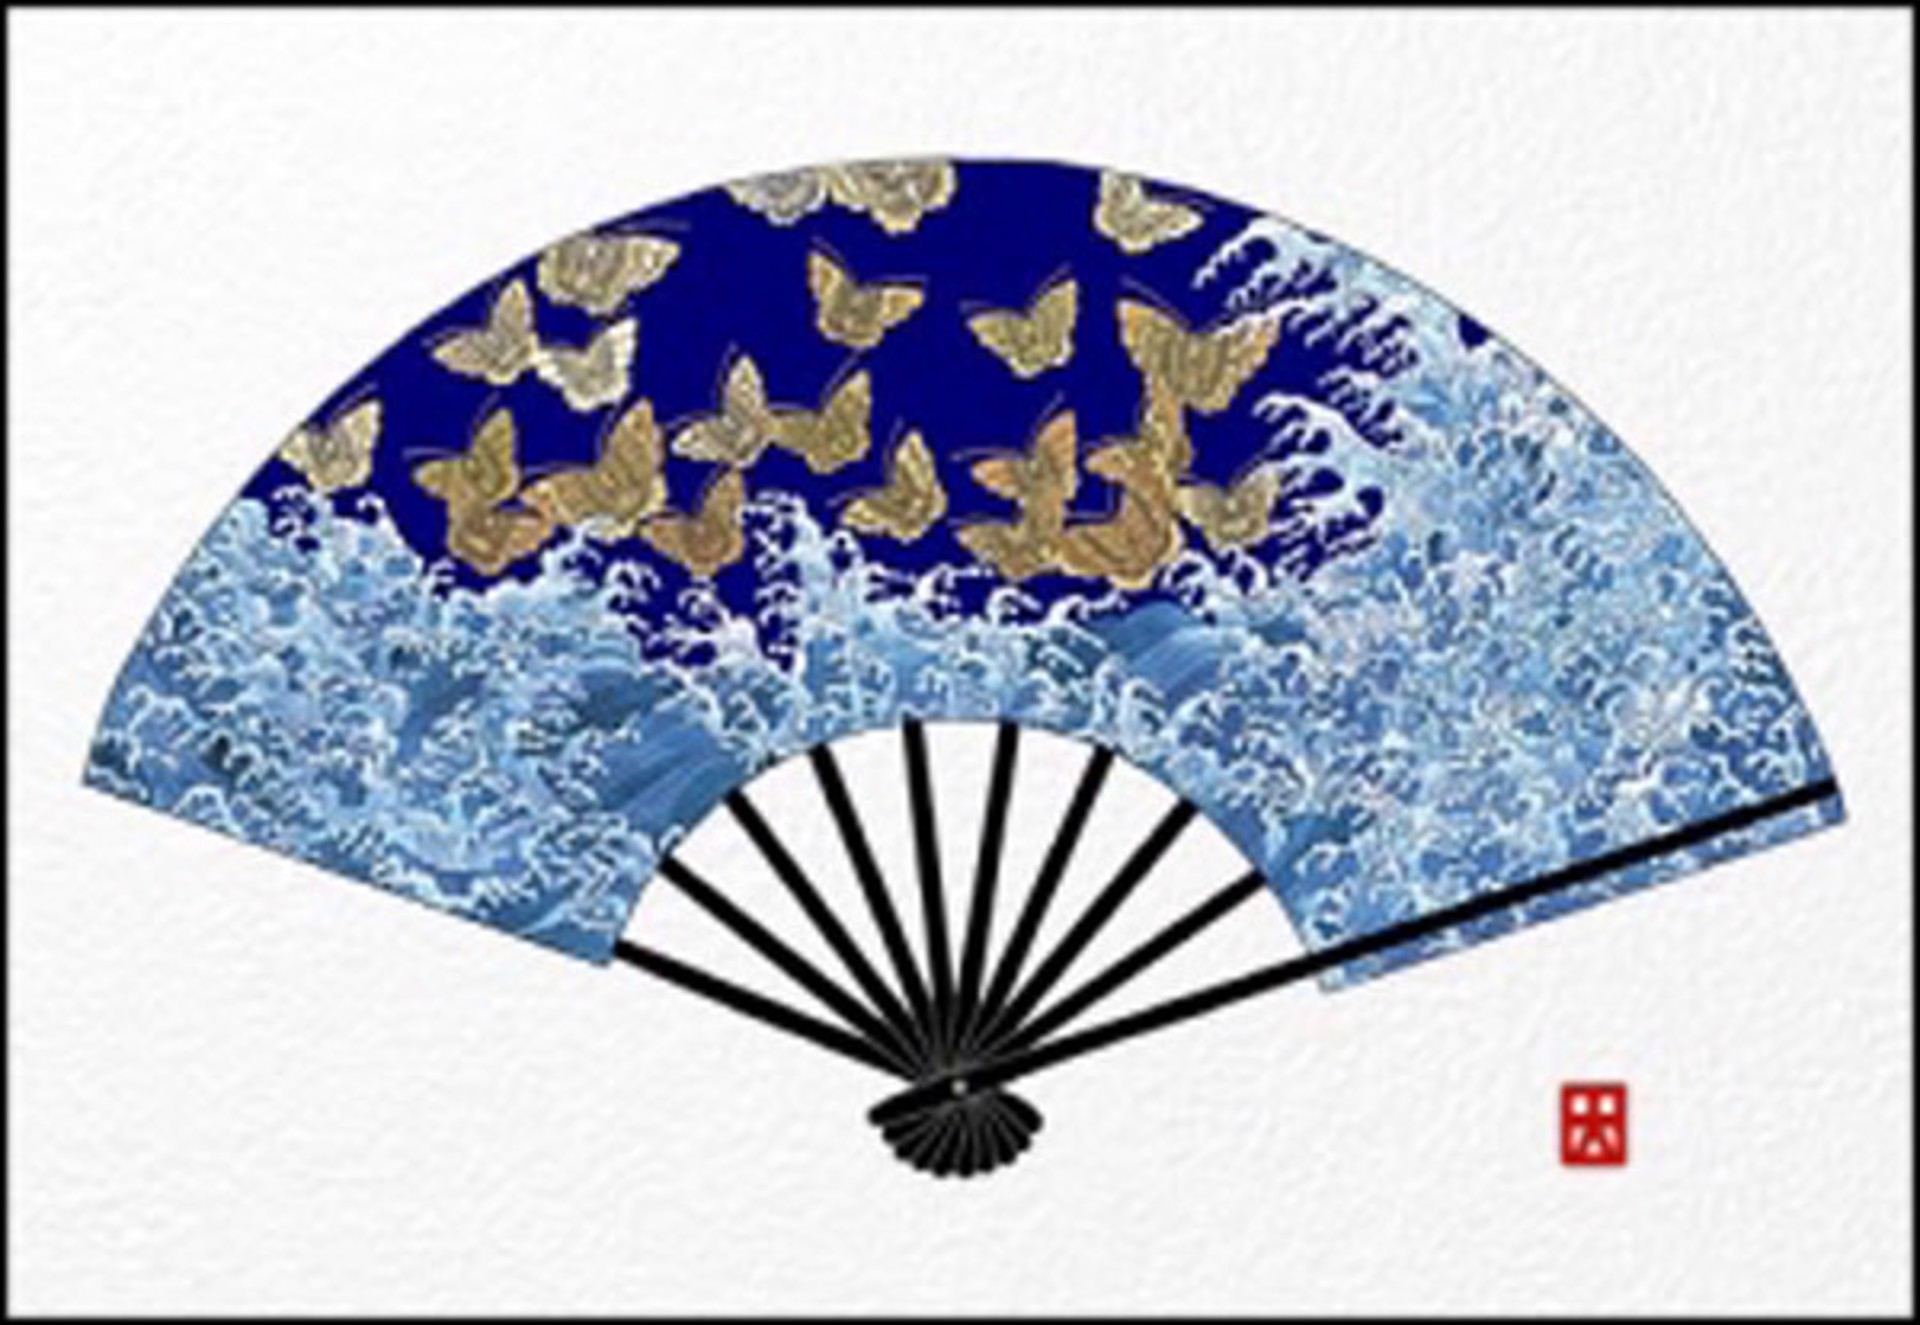 Waves of Papillon Fan by Hisashi Otsuka